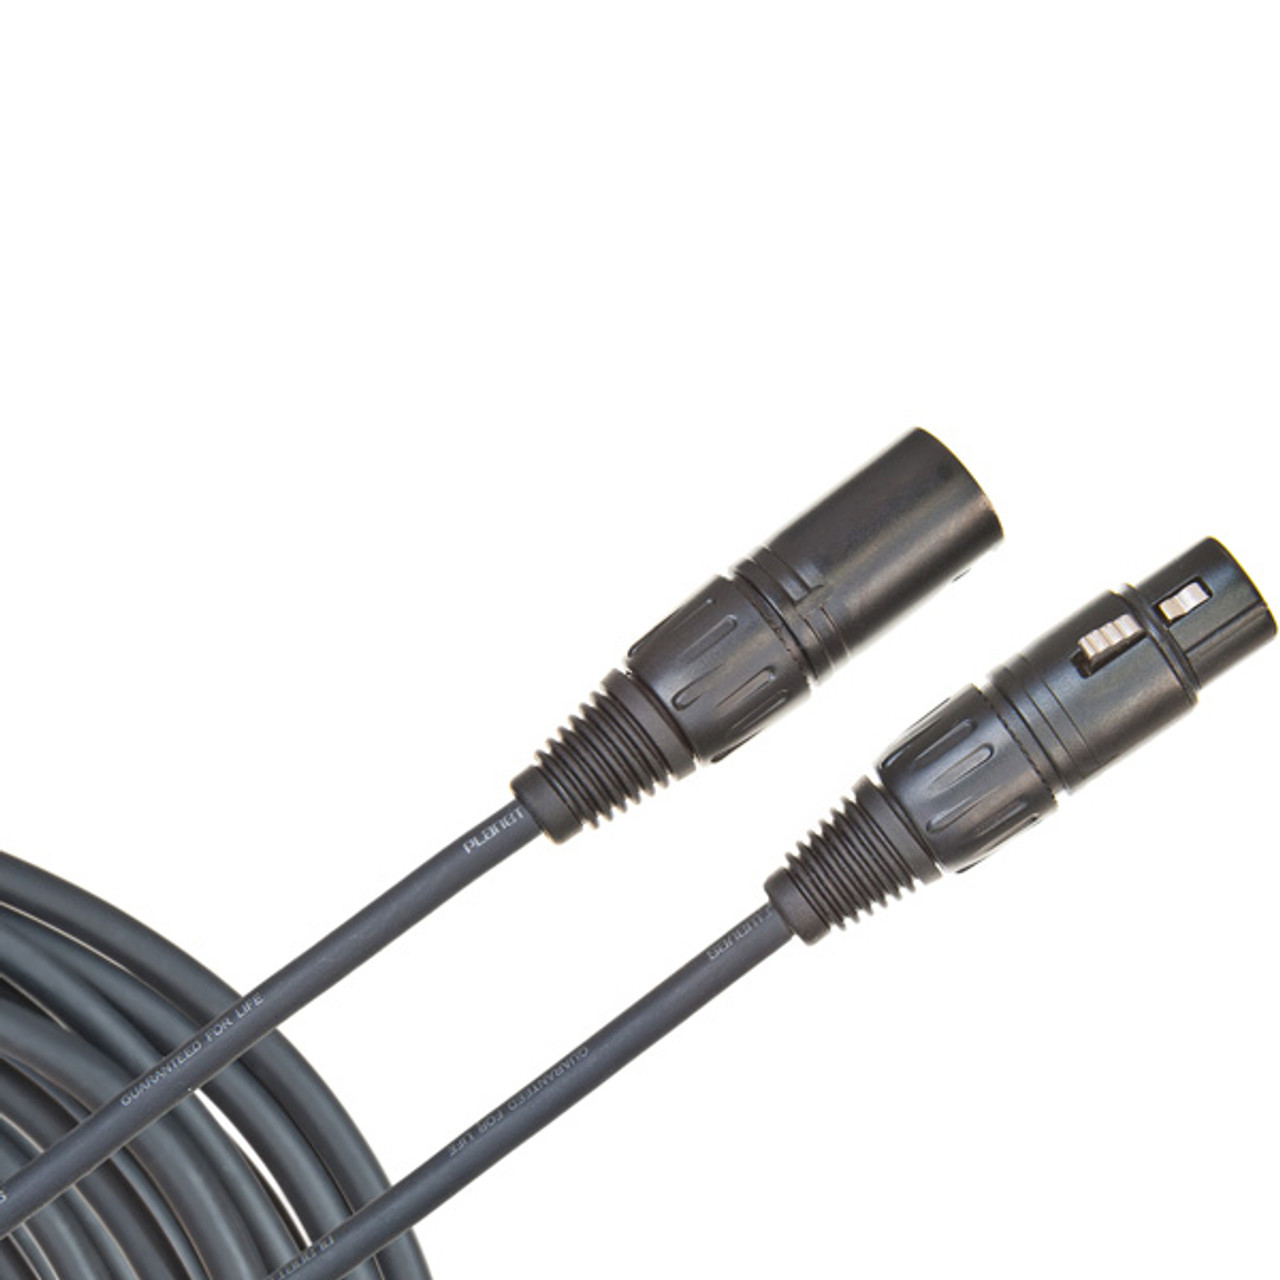 Microphone cable, XLR (female) - XLR (male)